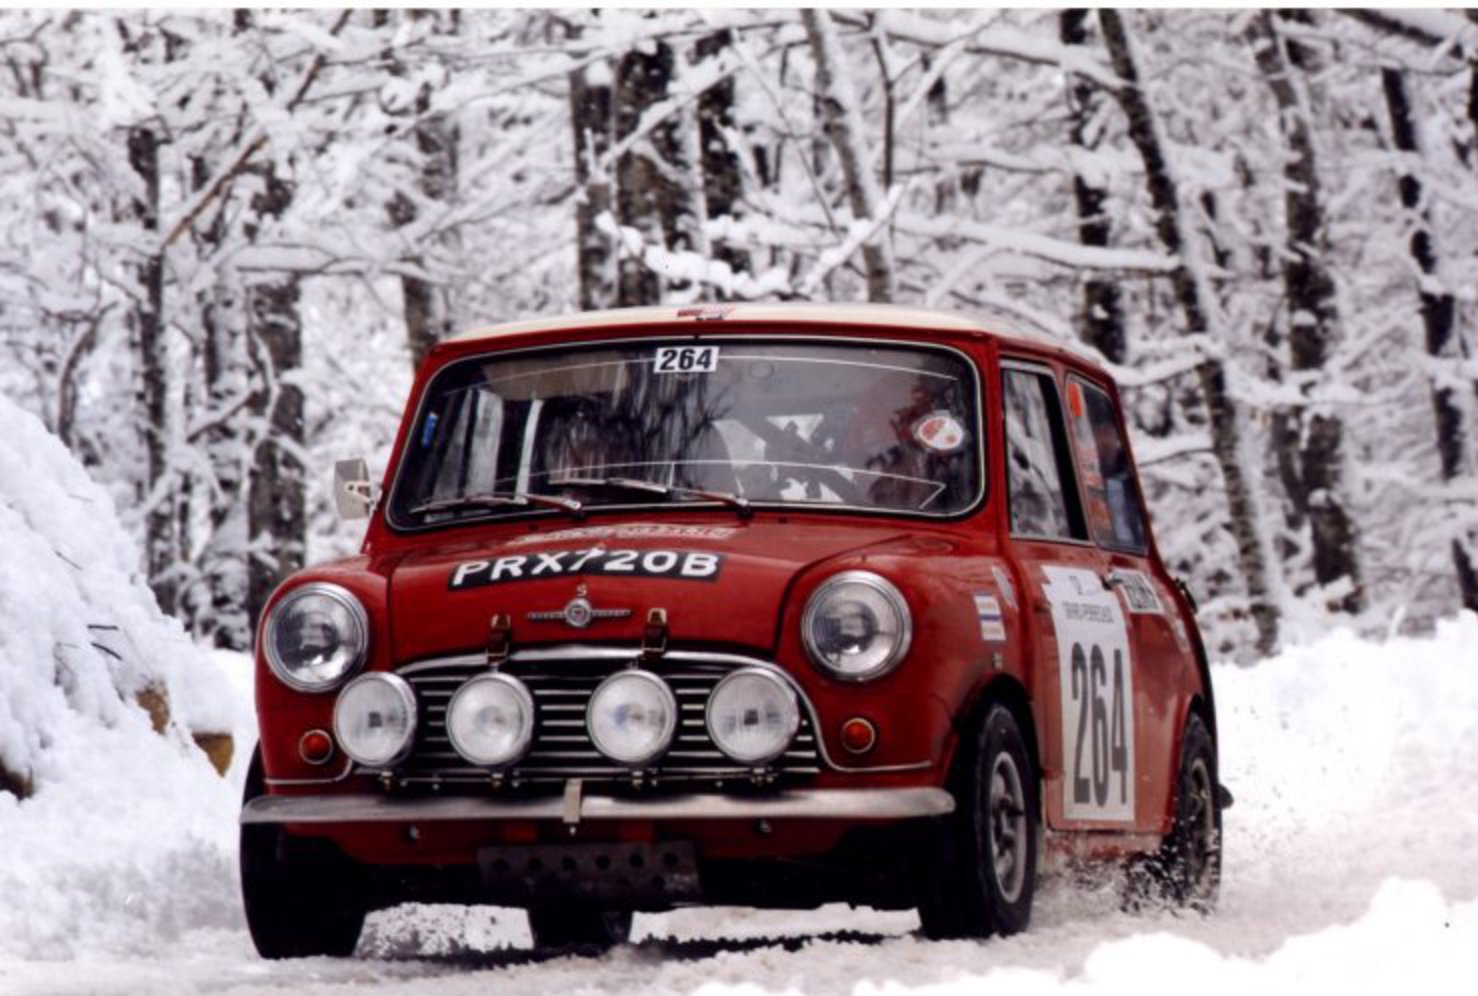 Monte Carlo Historique Rally | Bill Richards Racing